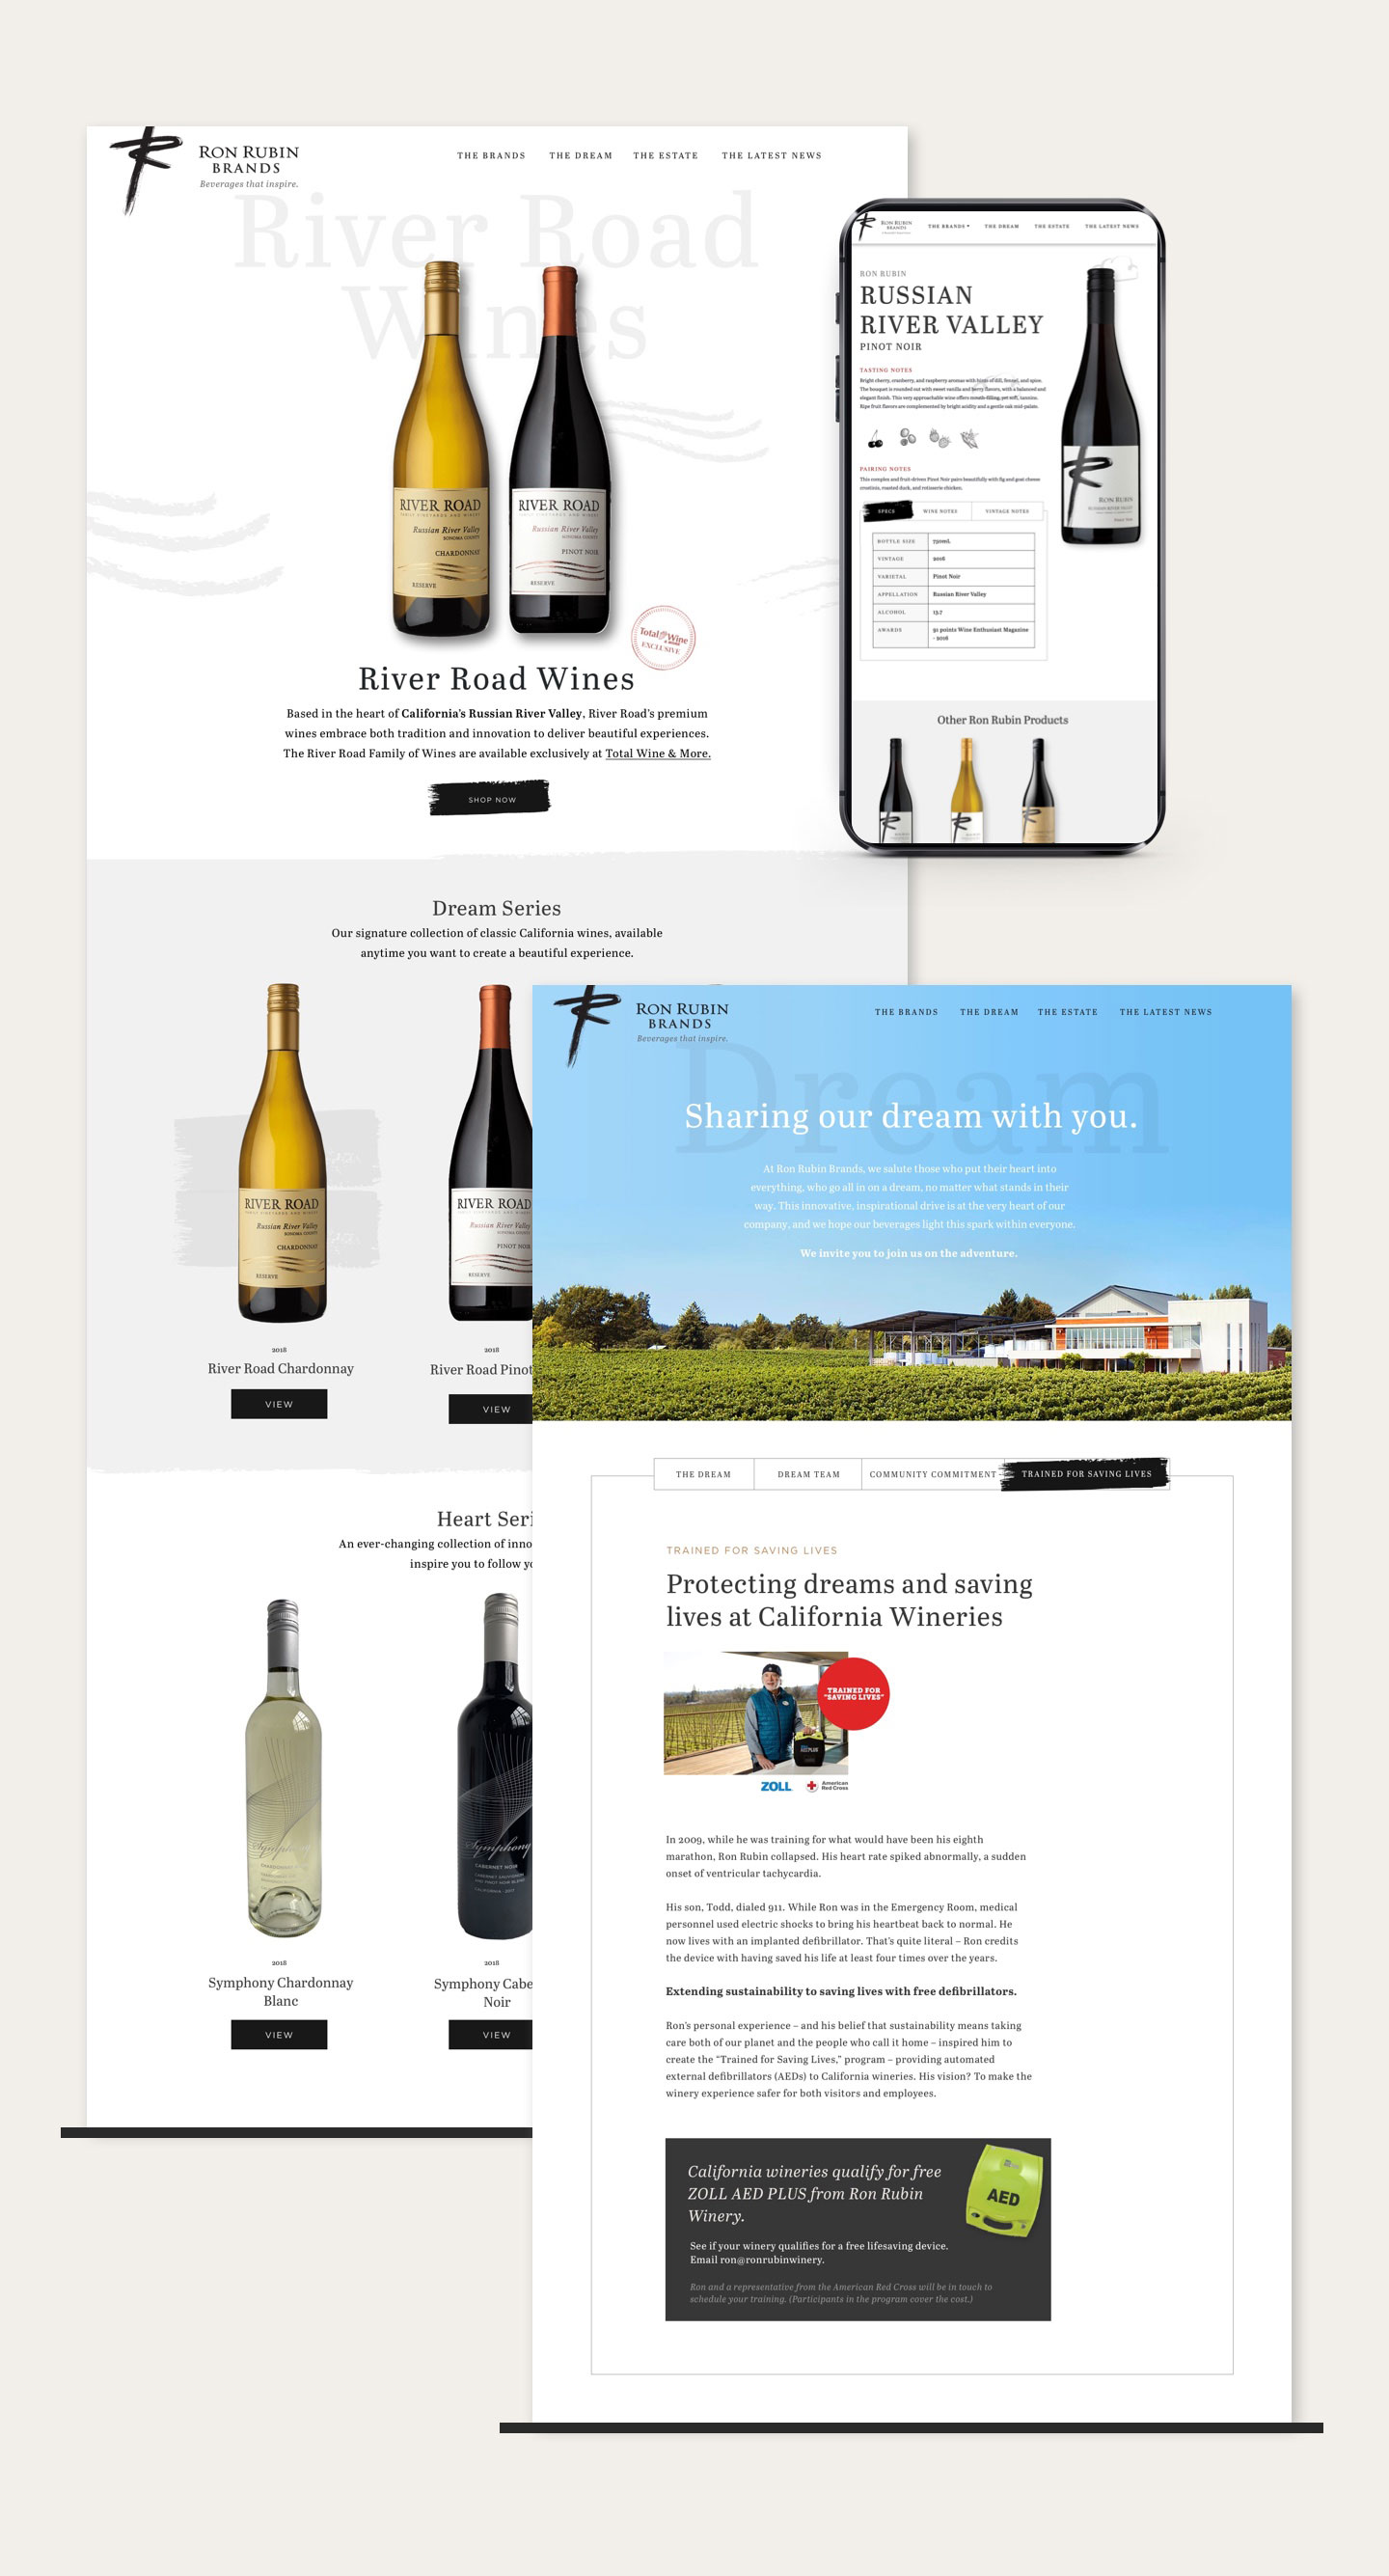 Mockups of Ron Rubin's website design compositions